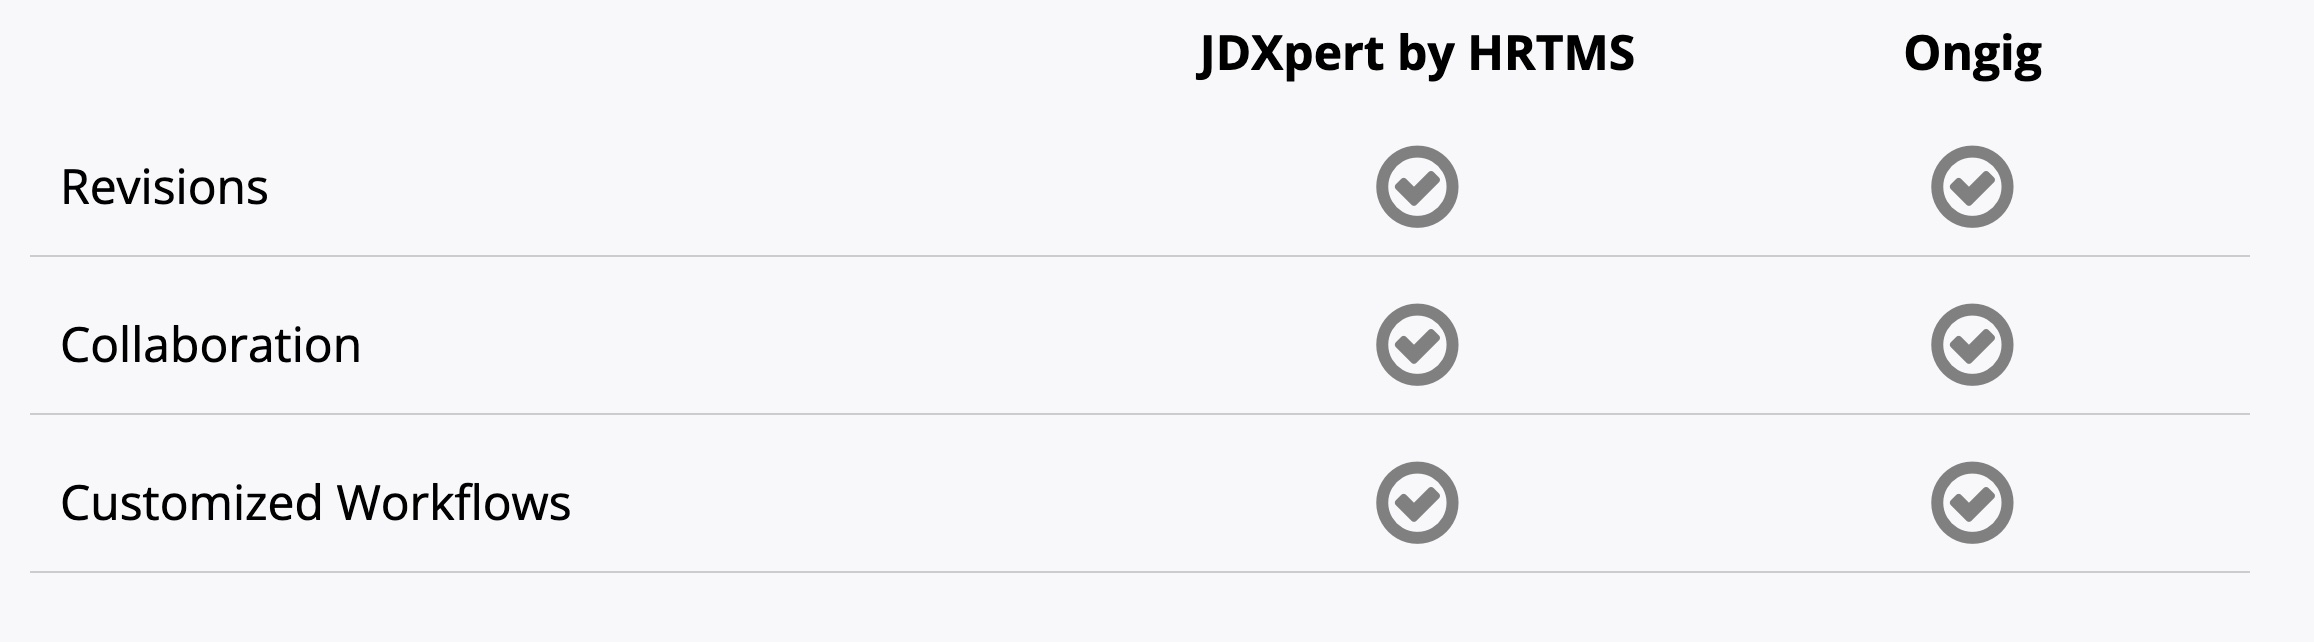 jdxpert-ongig-comparison-jd-editing